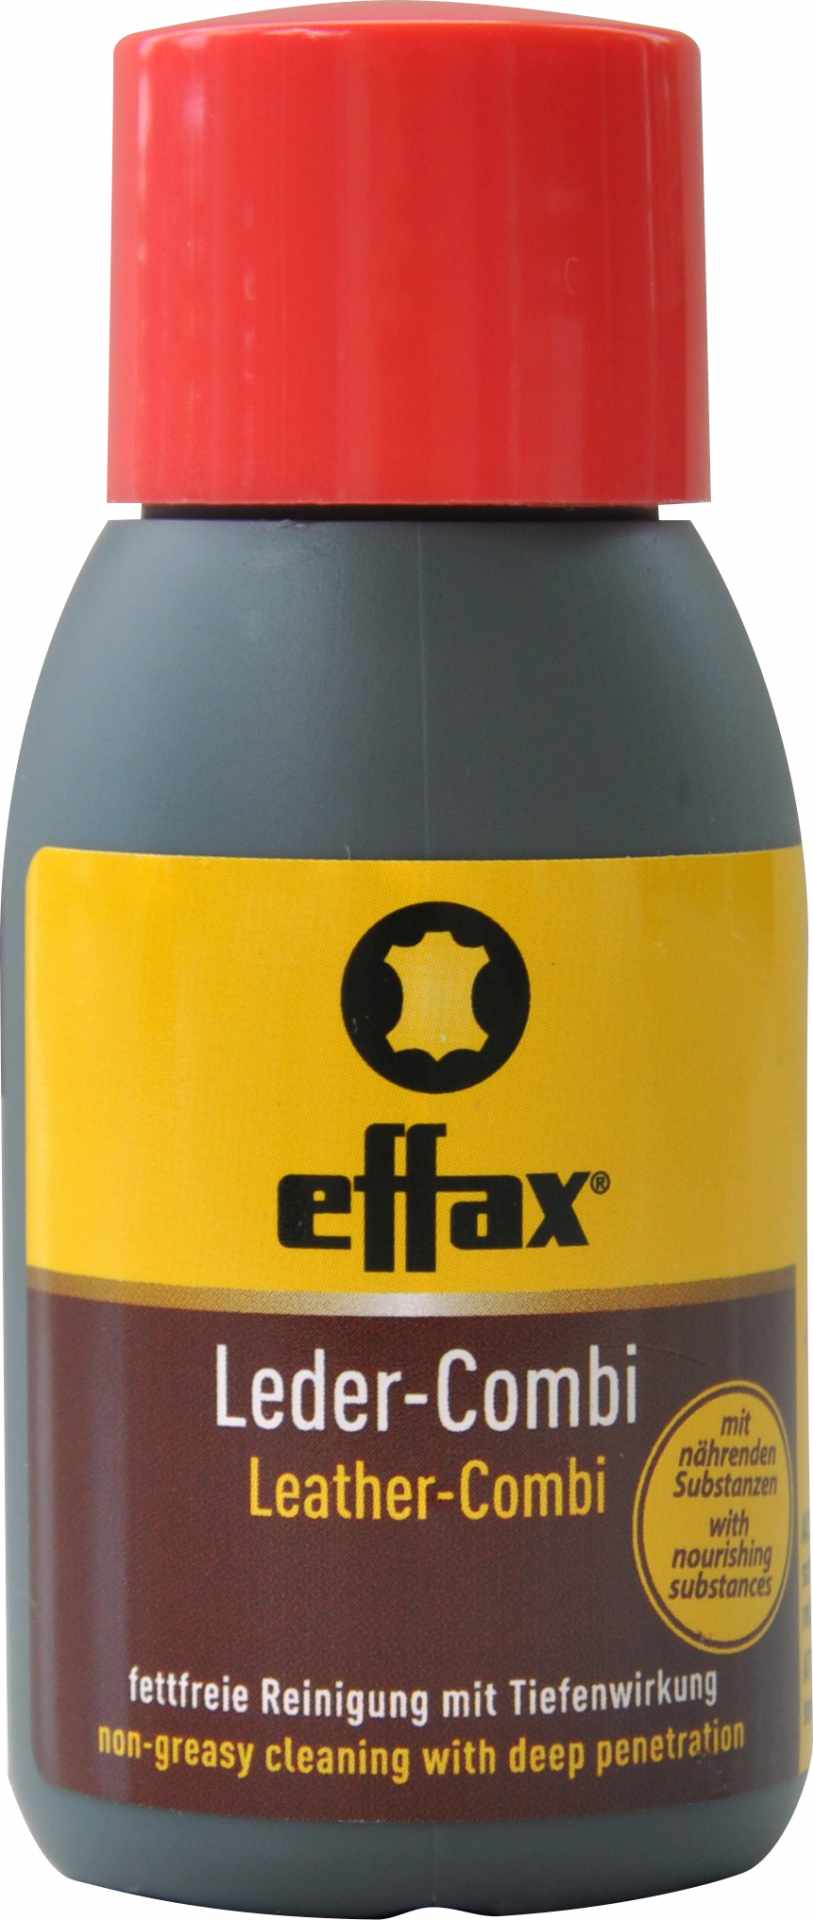 Effax-Leder-Combi